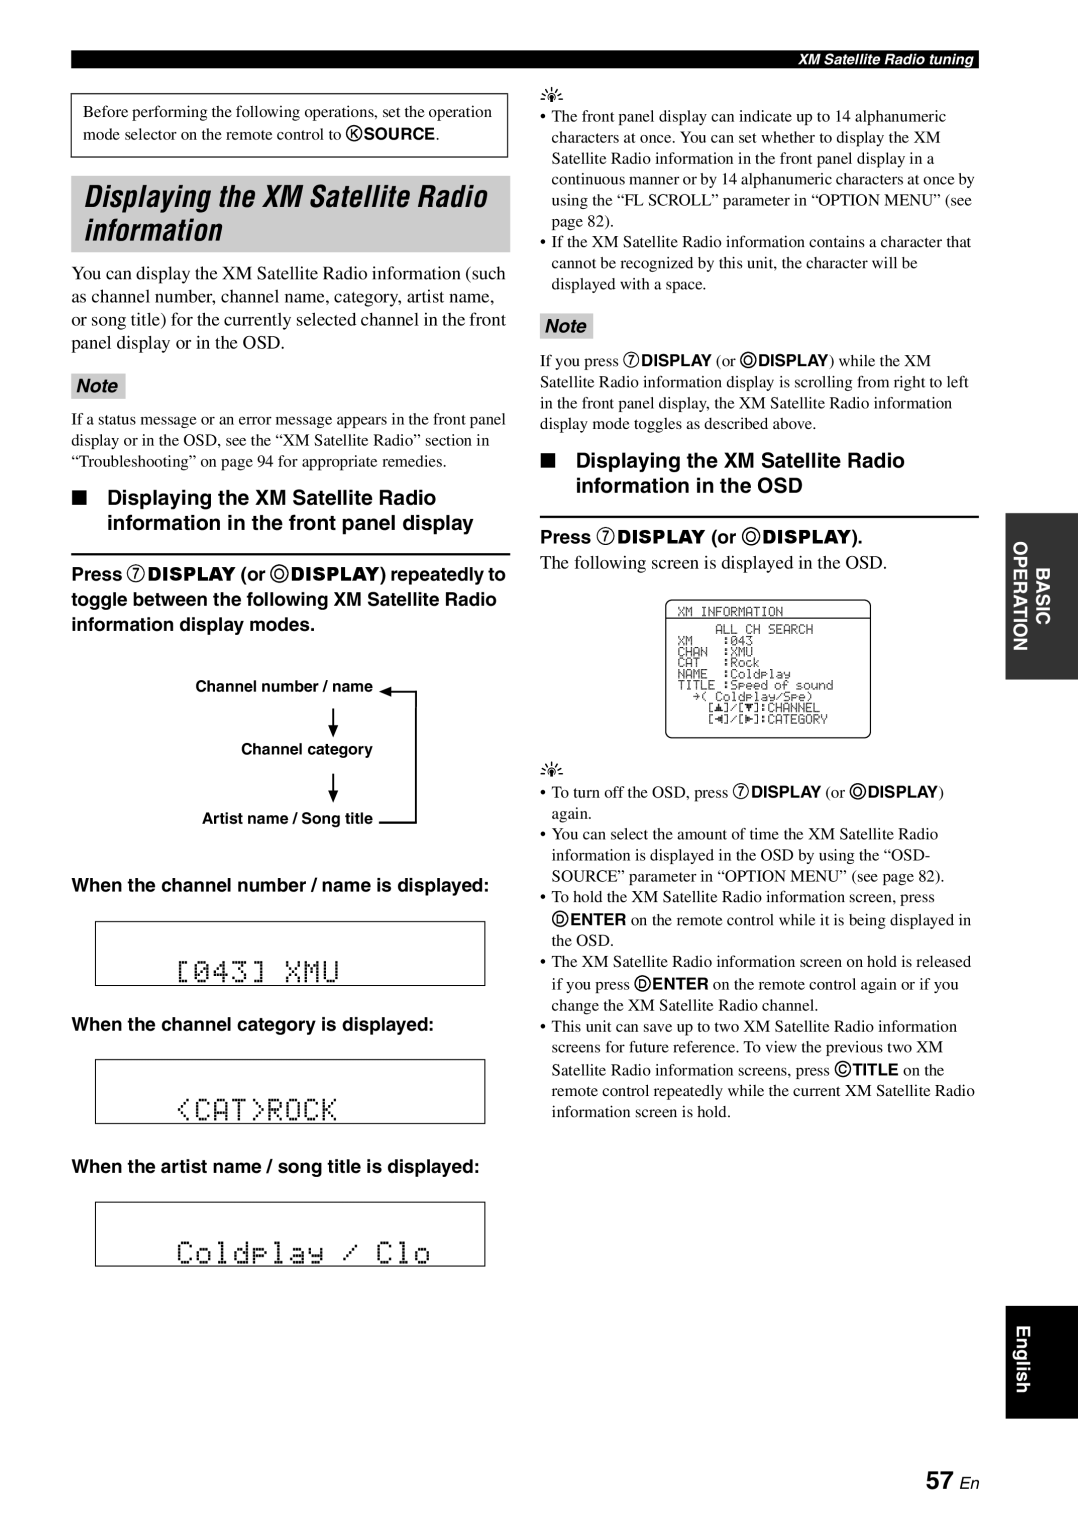 Yamaha HTR-6080 owner manual Displaying the XM Satellite Radio information, Coldplay / Clo, <Cat>Rock, 57 En, 043 XMU 